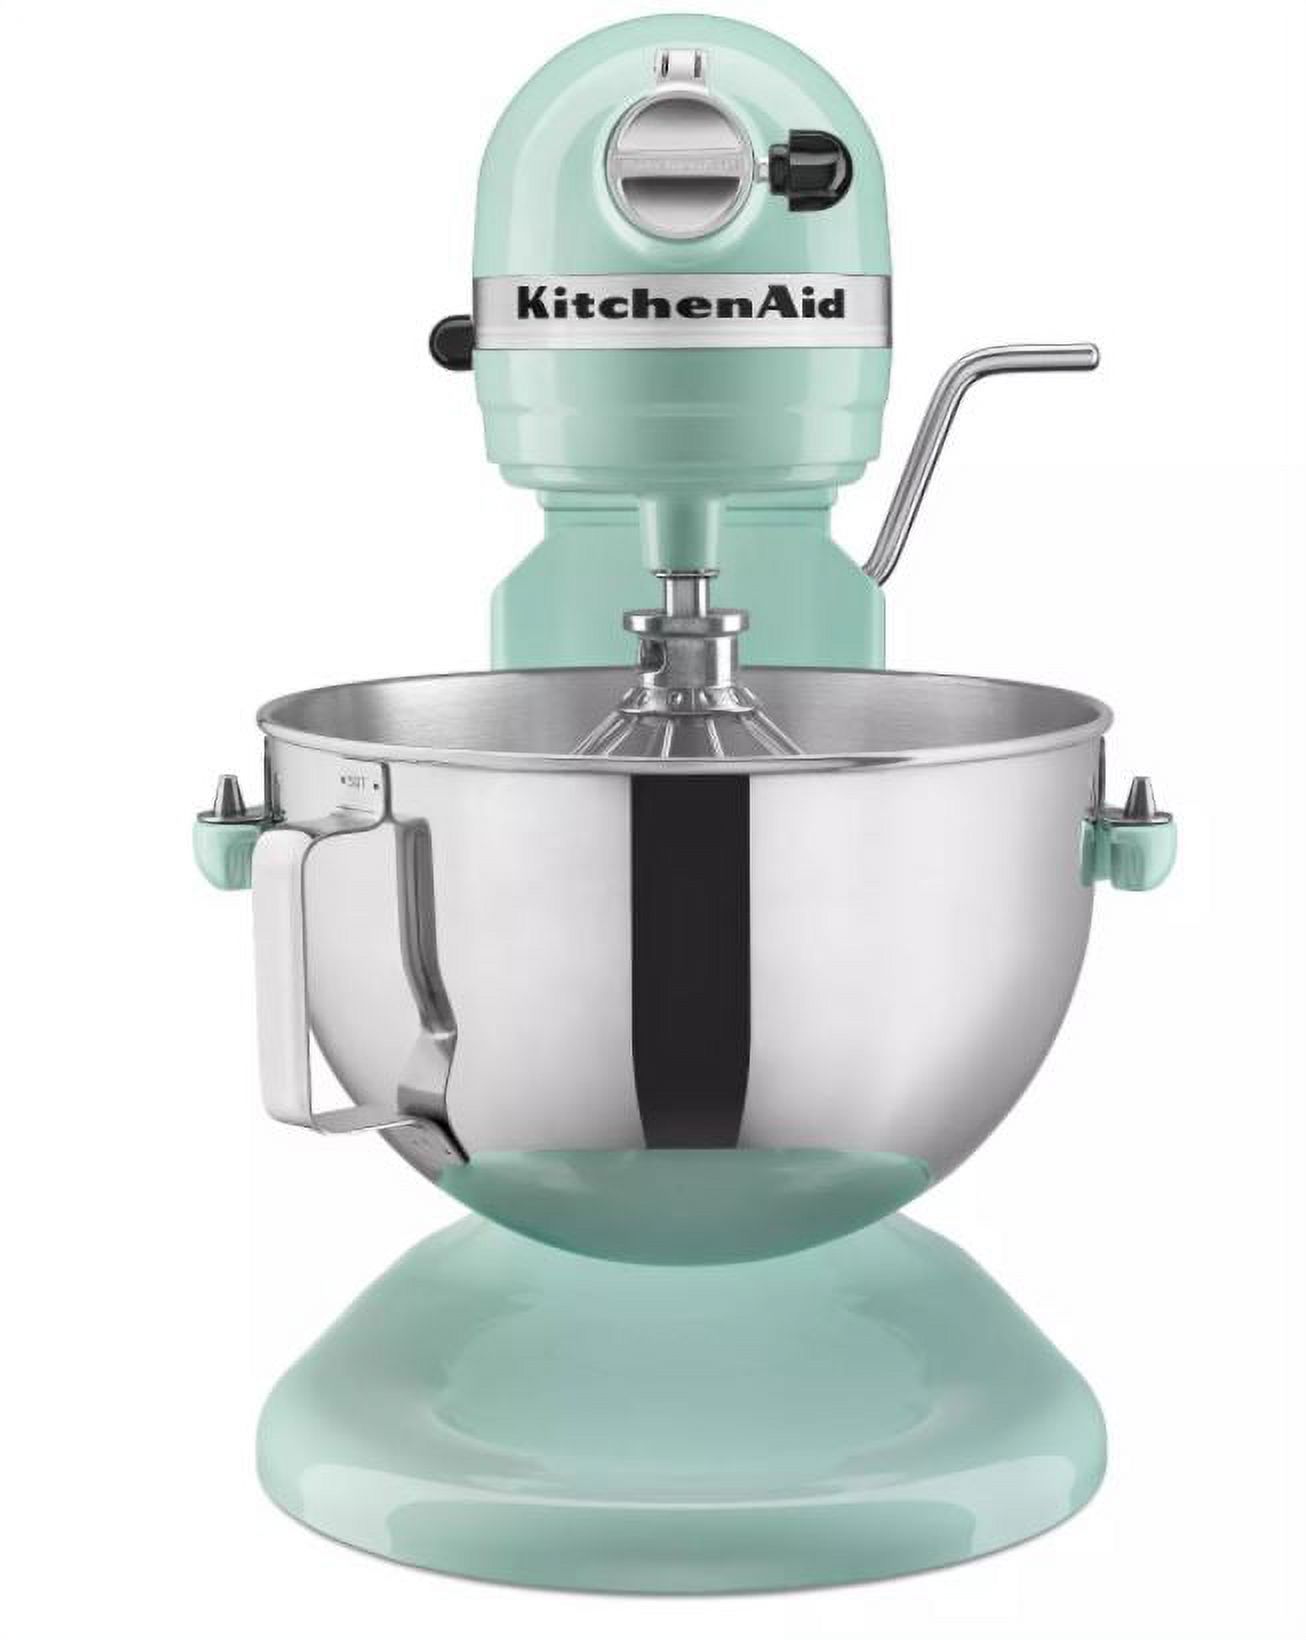 KitchenAid Professional 5qt Mixer - Ice Blue - image 3 of 4